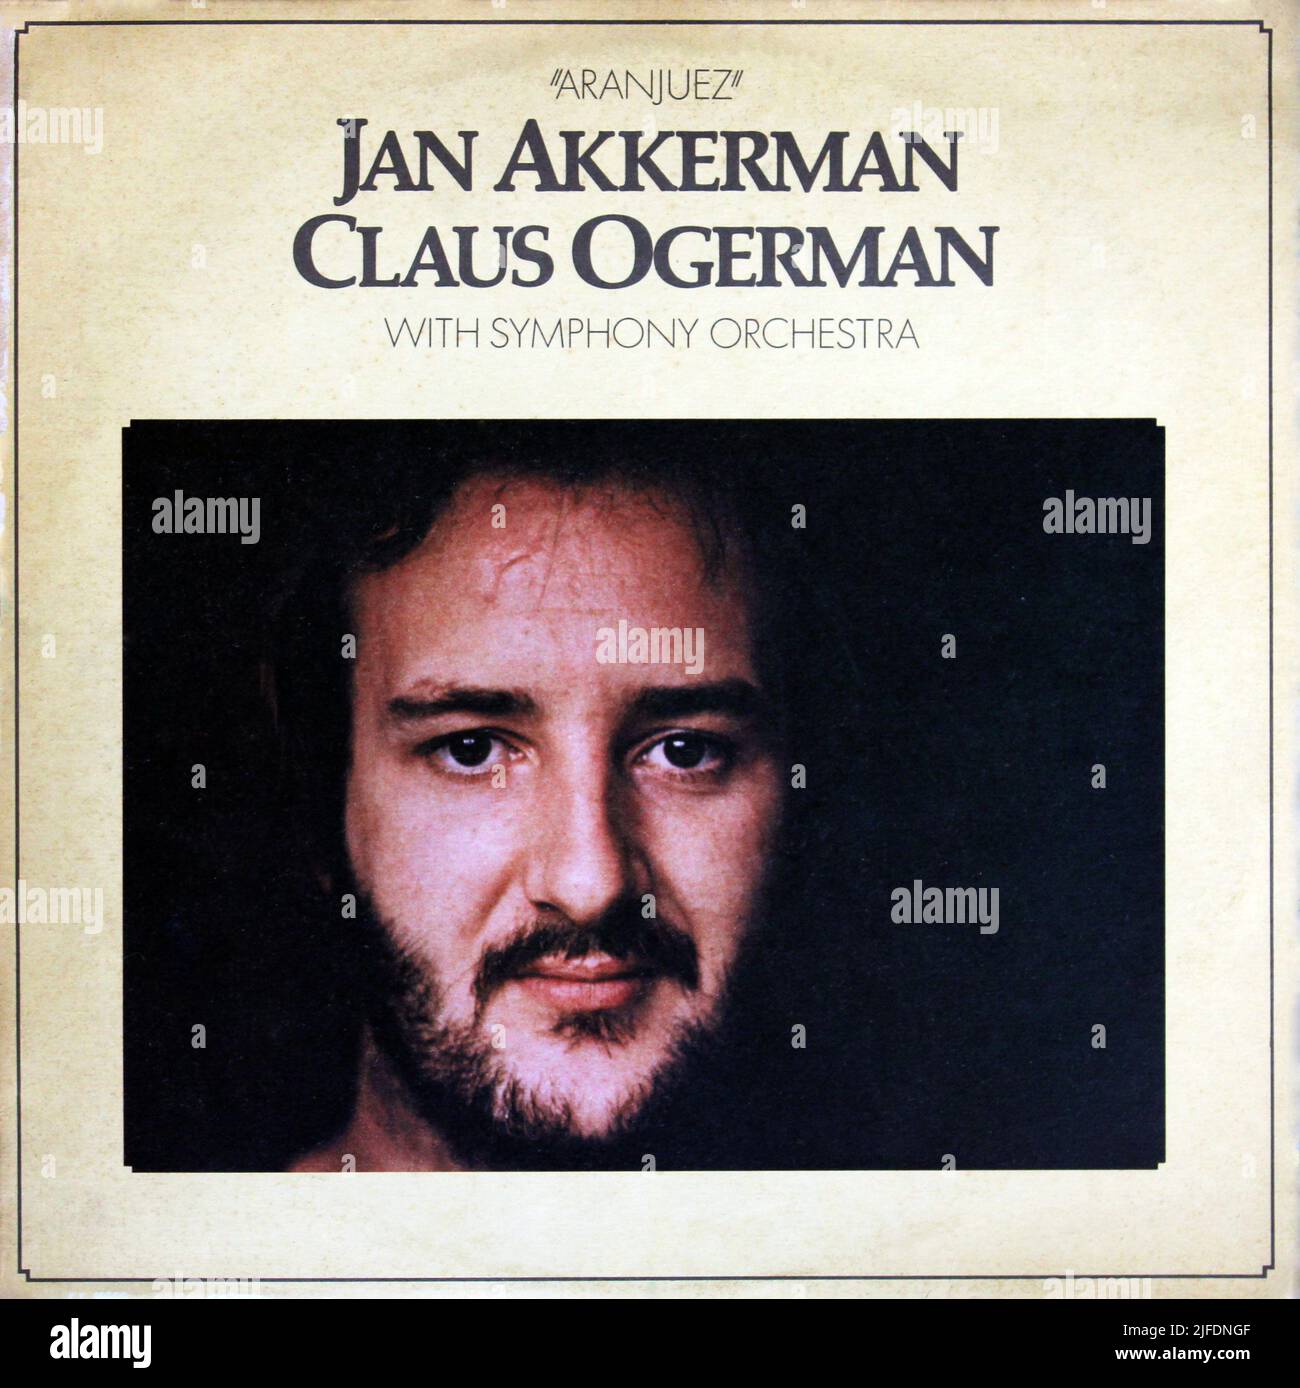 Jan Akkerman, Claus Ogerman with Symphony Orchestra: 1978. LP front cover 'Aranjuez' Stock Photo